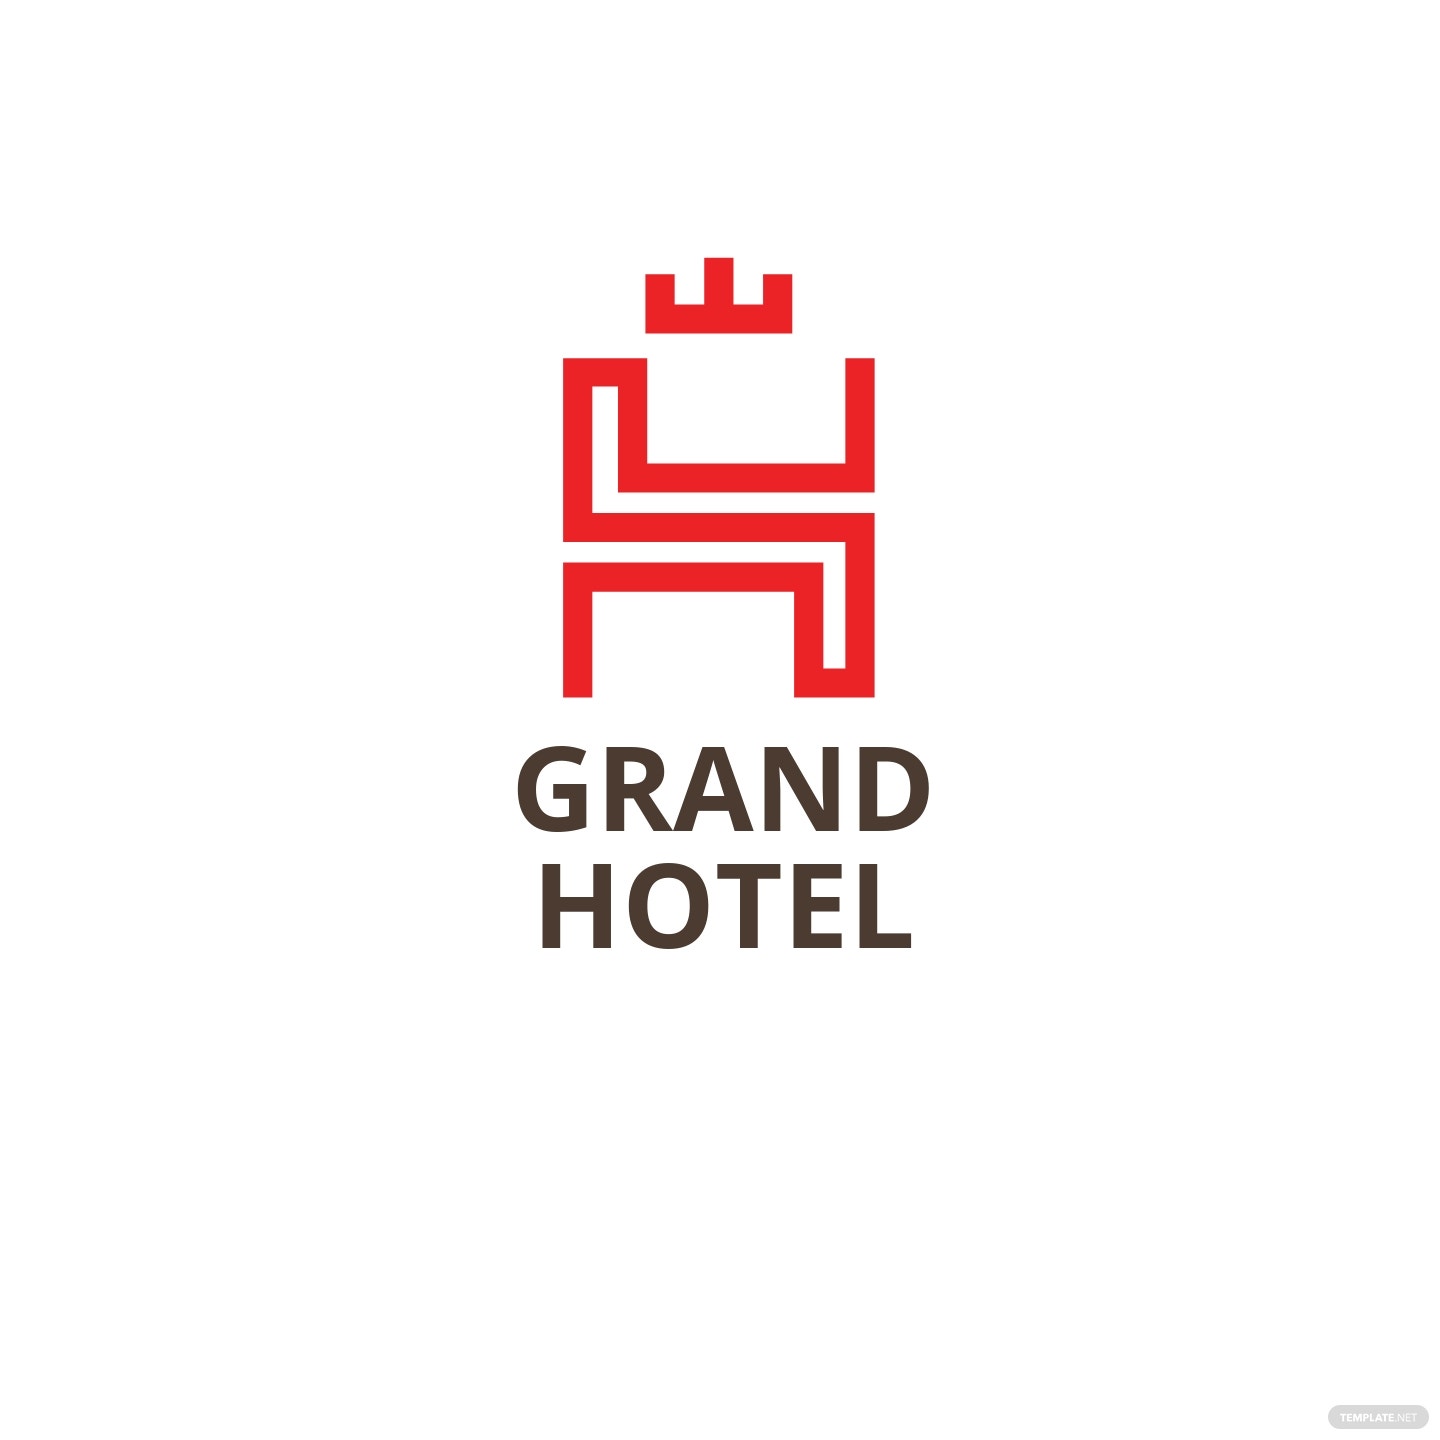 grand hotel logo template